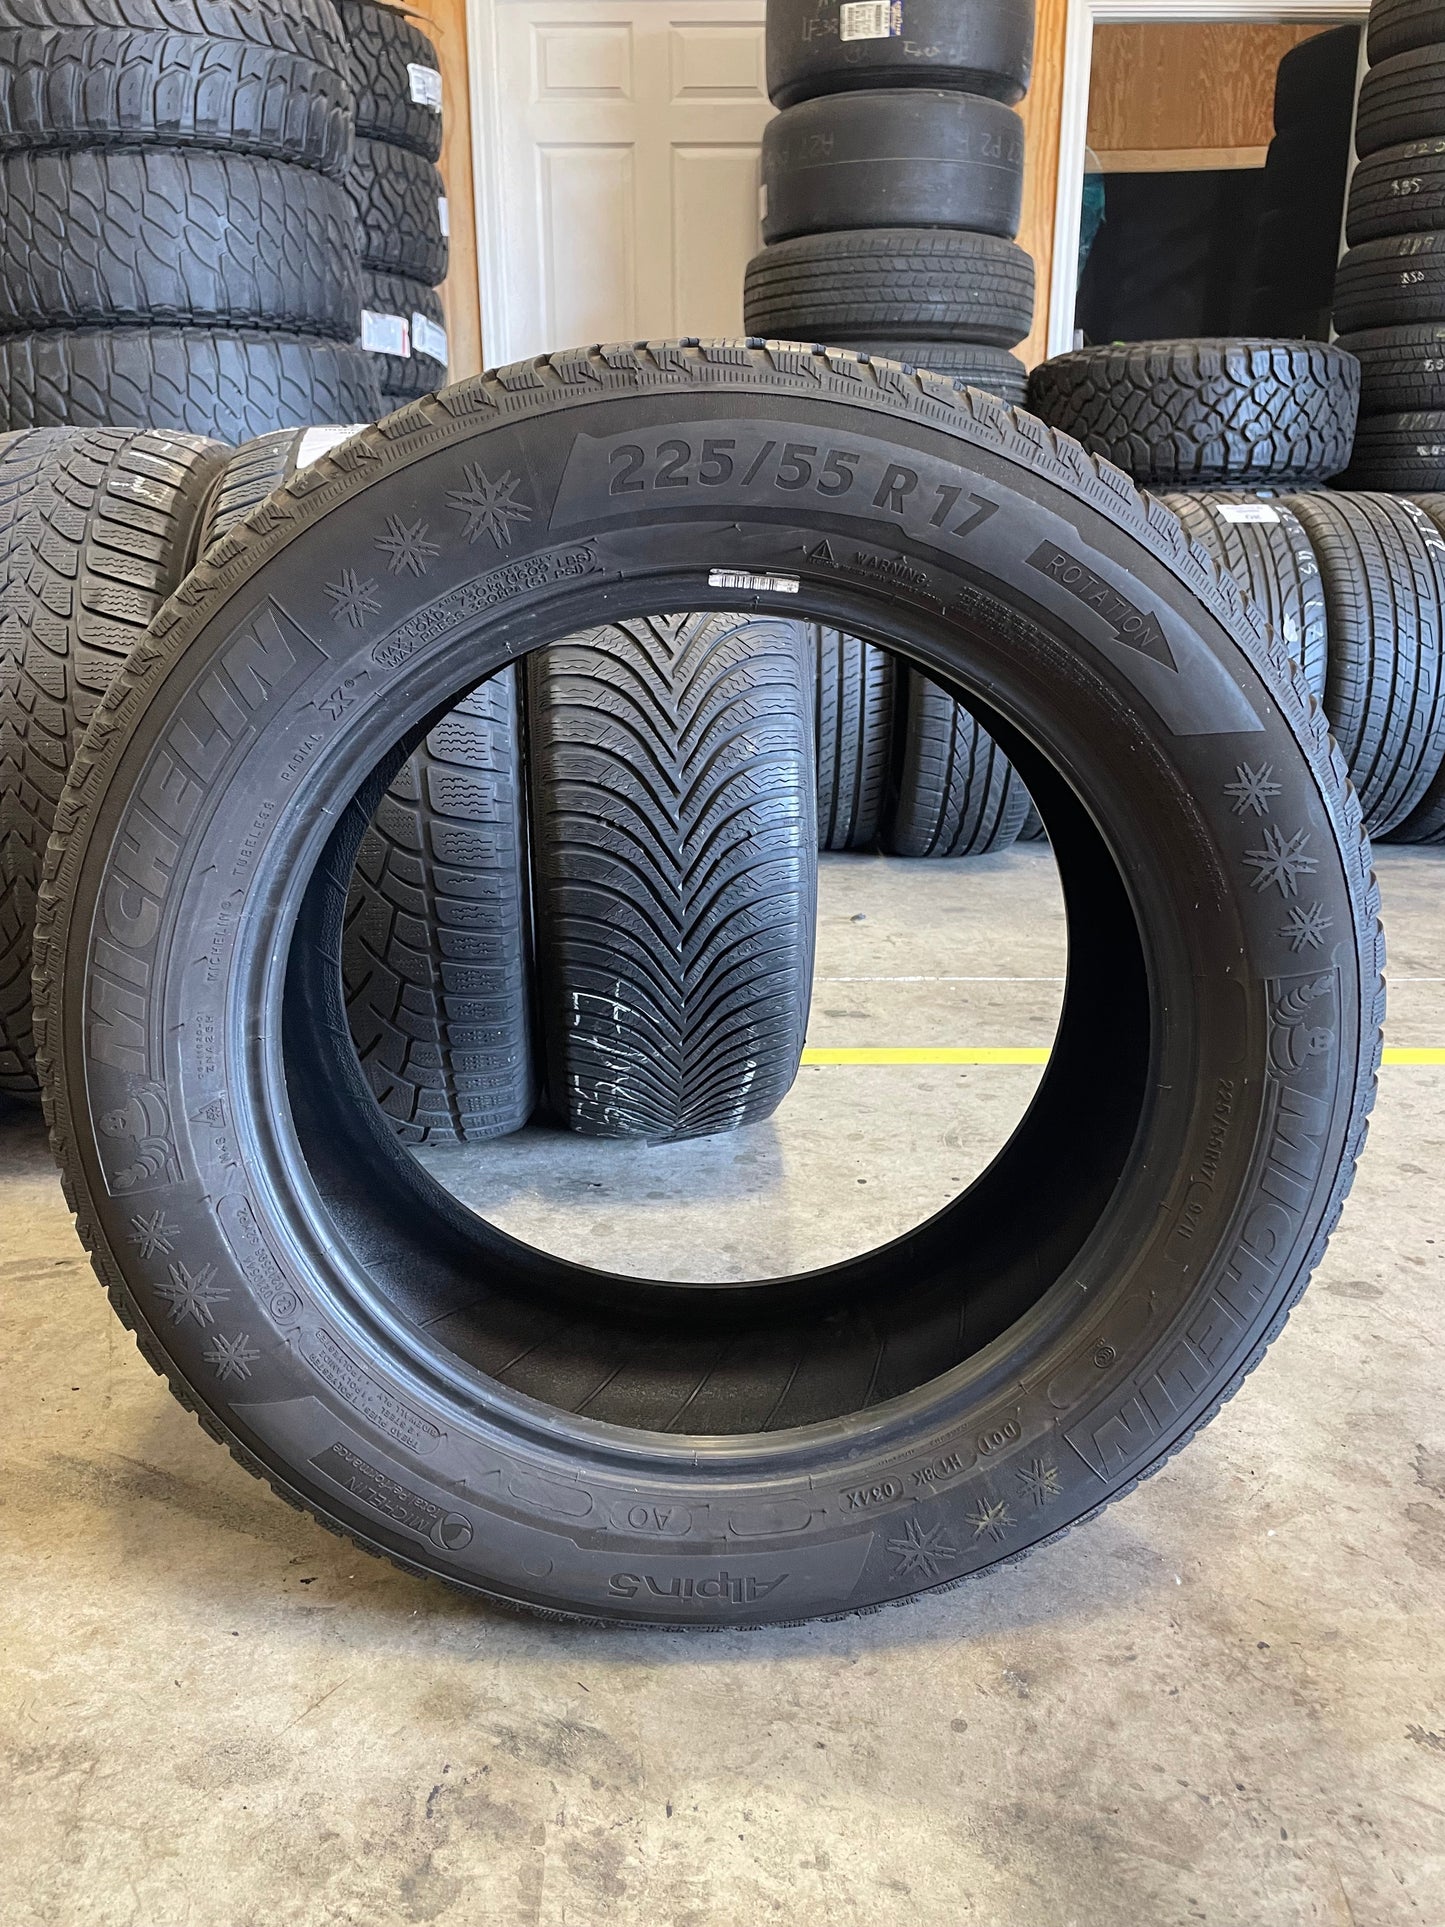 SINGLE 225/55R17 Michelin Alpin 5 97 H SL - Used Tires